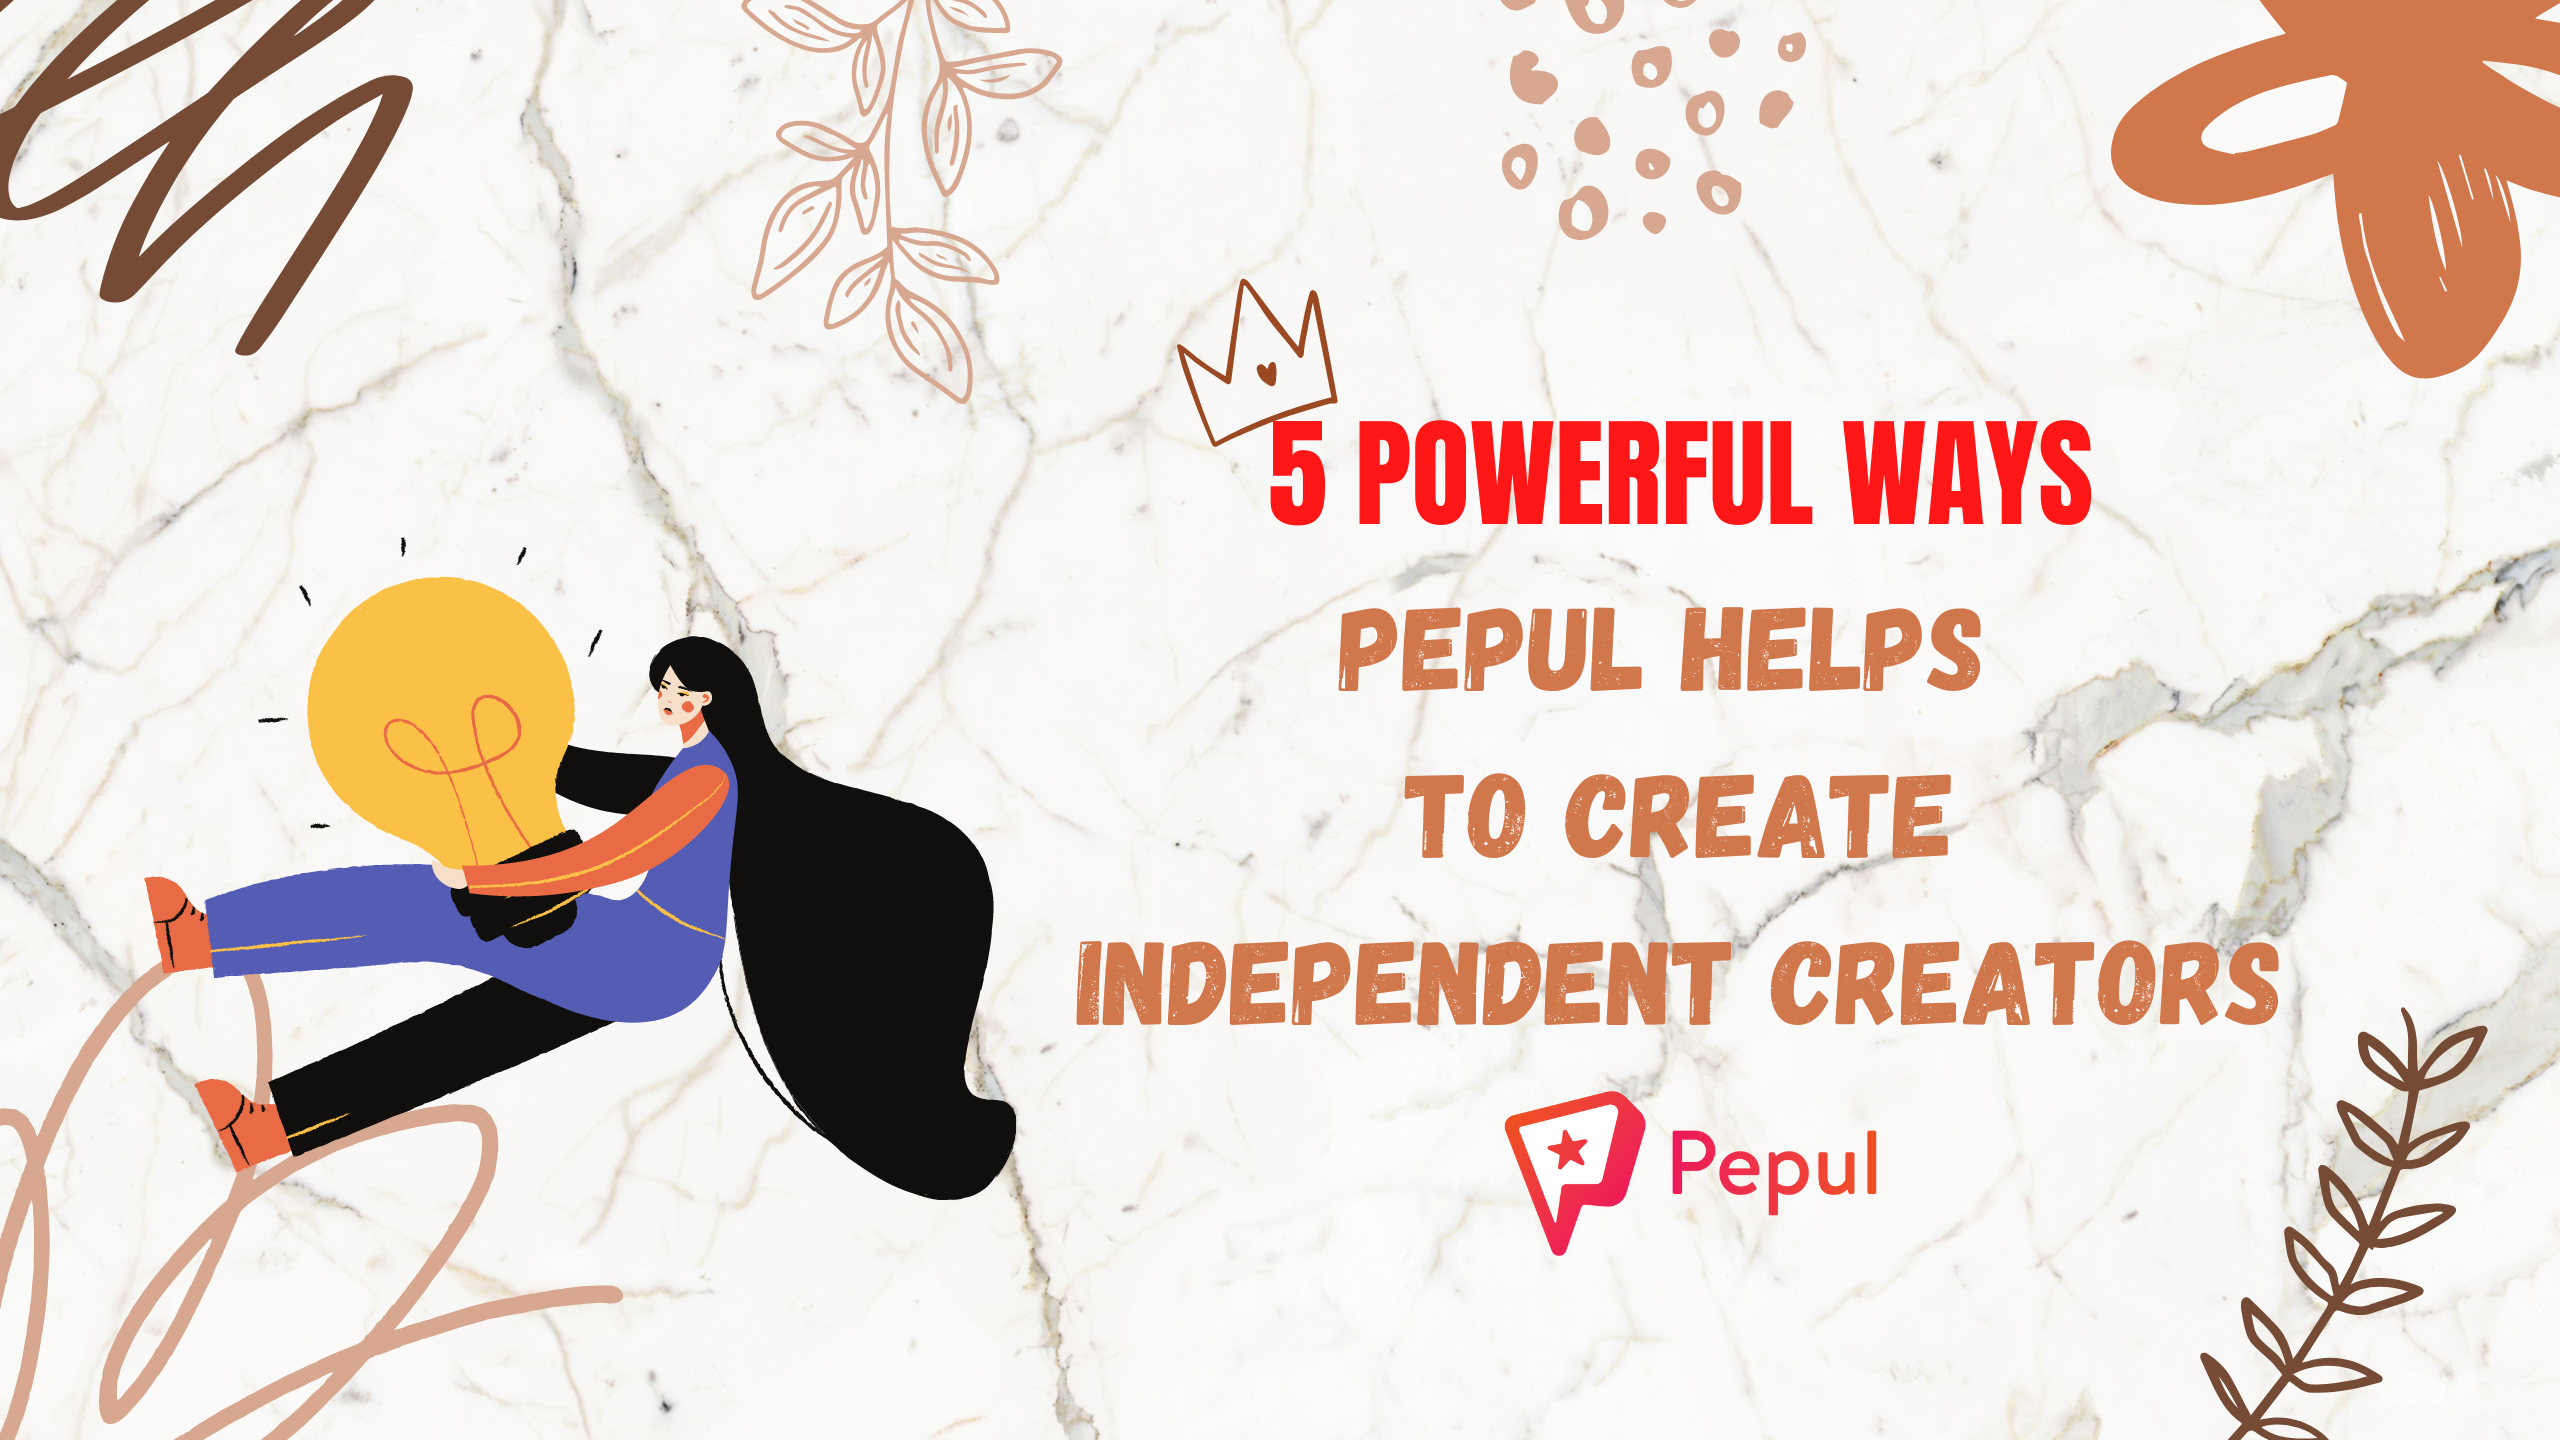 5 Powerful Ways Pepul helps Creators to Become Independent